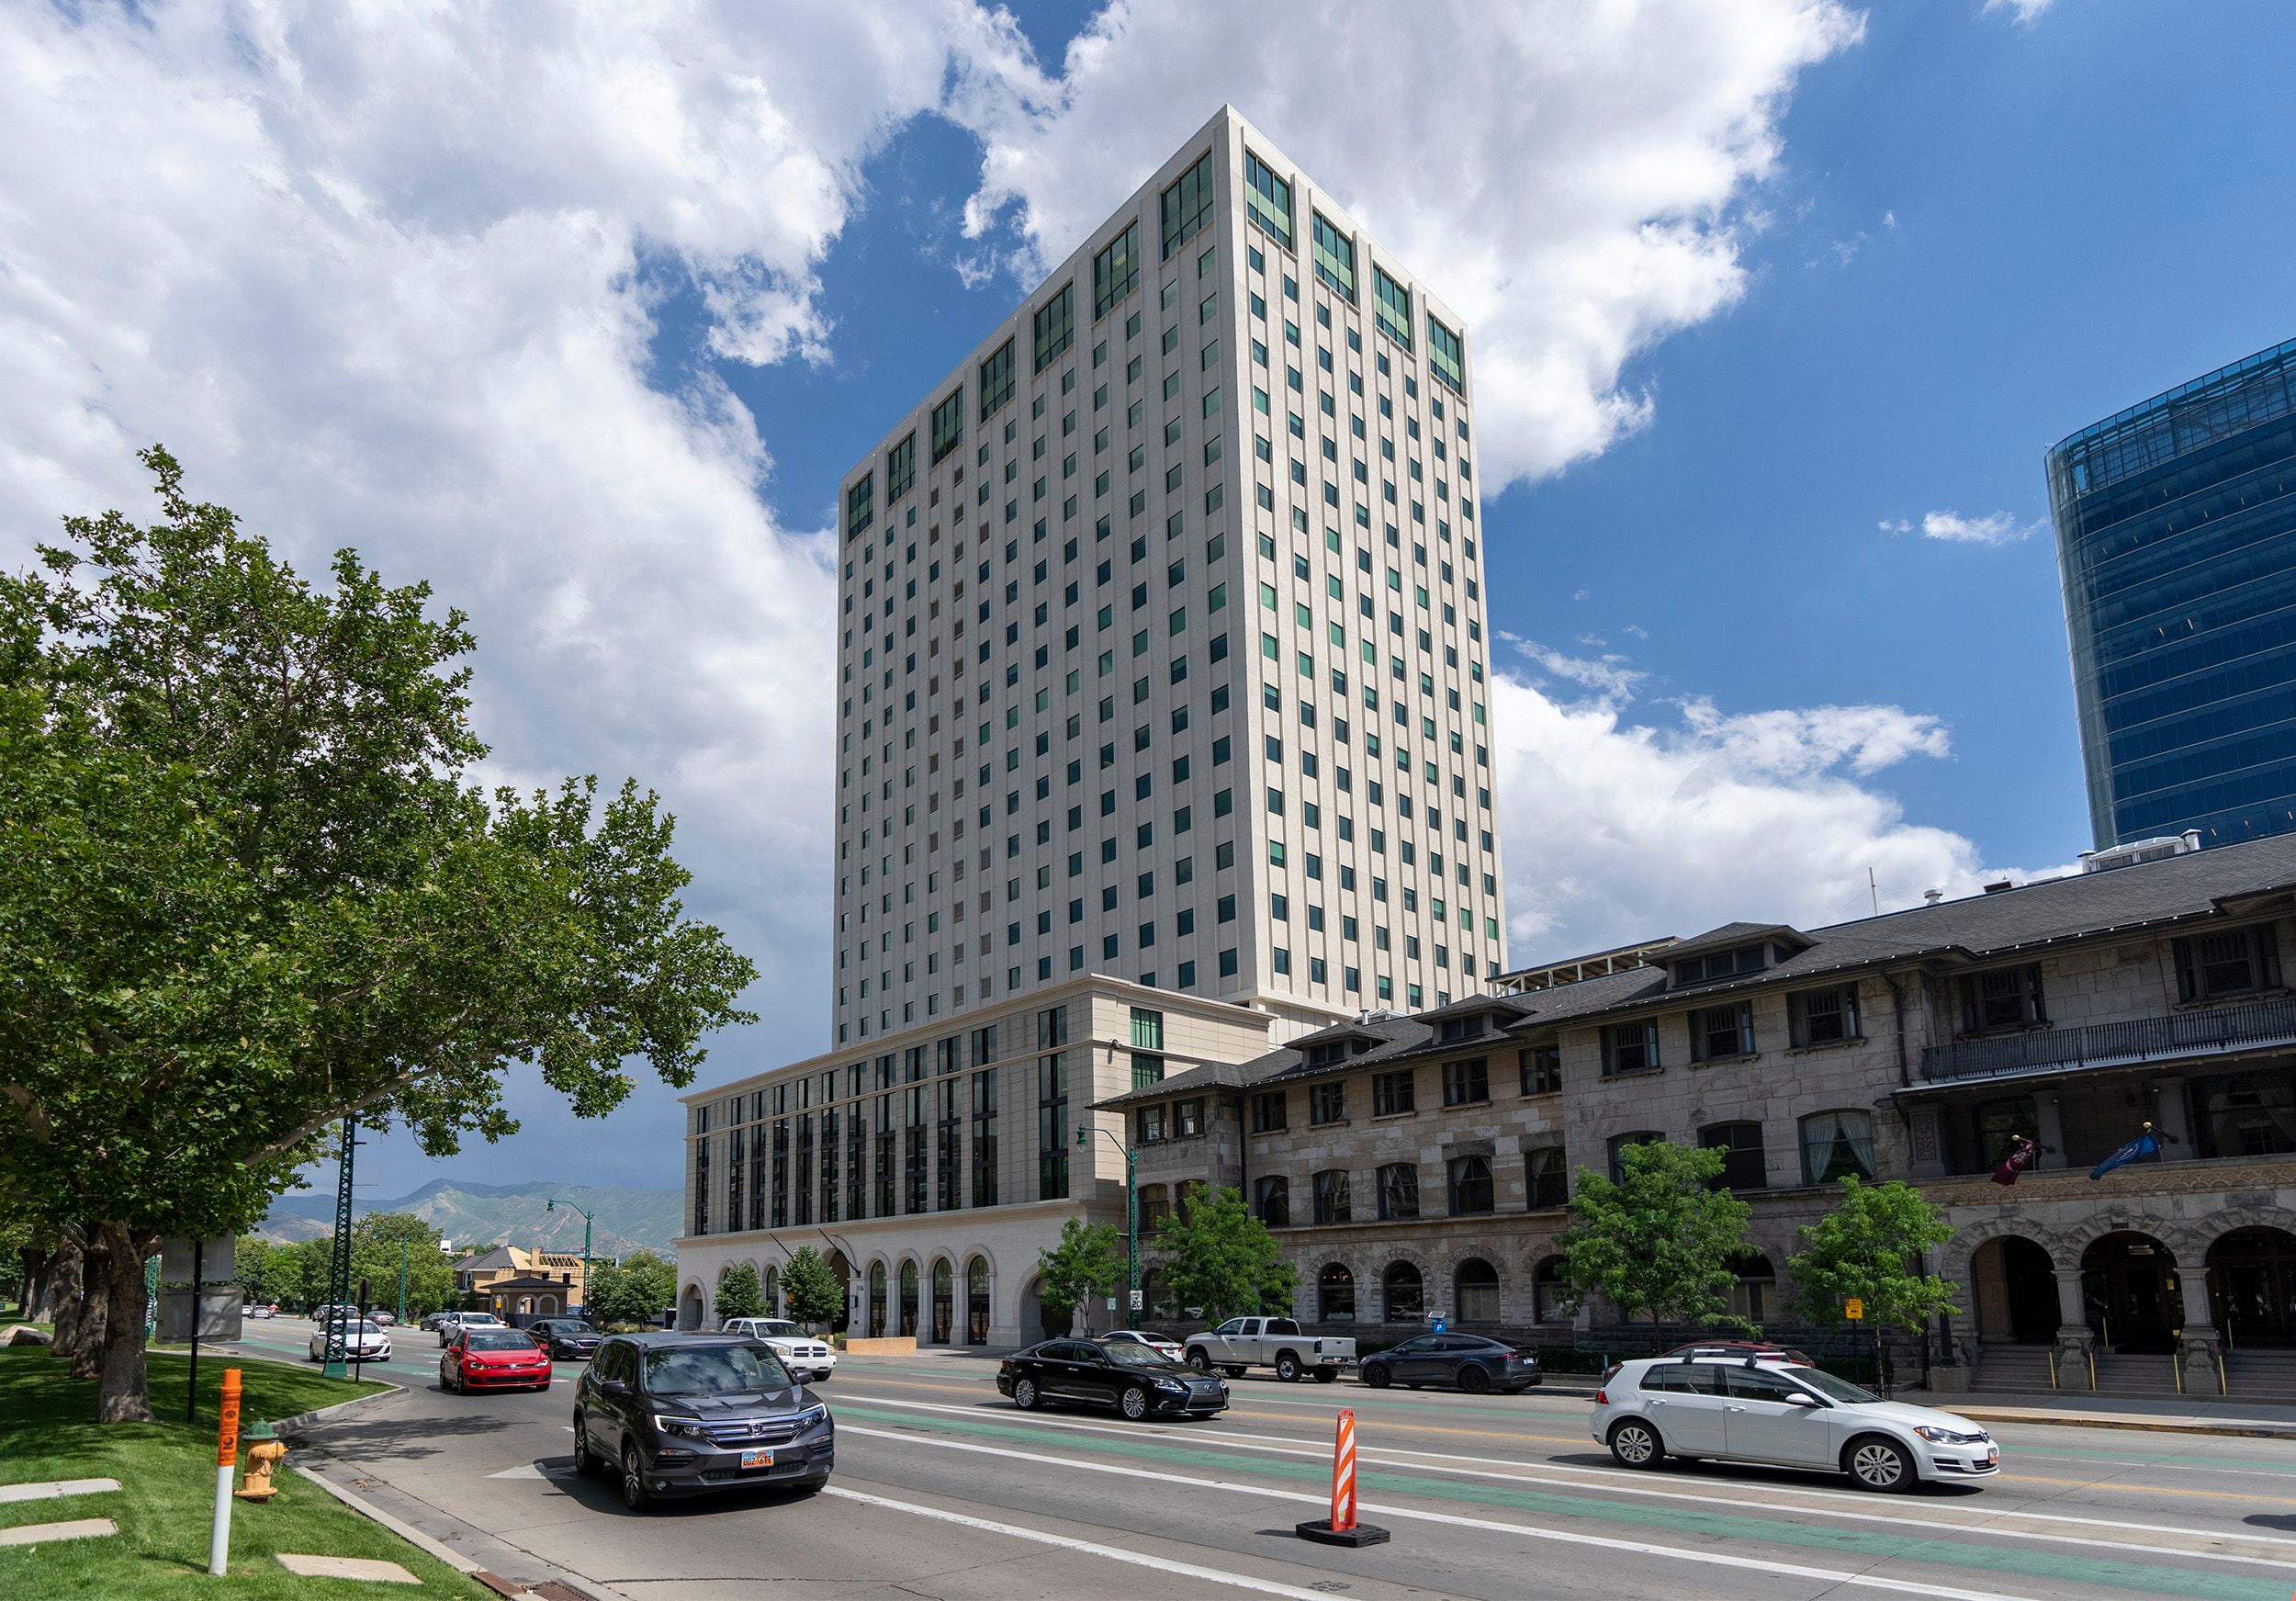 (Rick Egan | The Salt Lake Tribune) The former University Club Tower on South Temple in Salt Lake City is shown in June 2022.